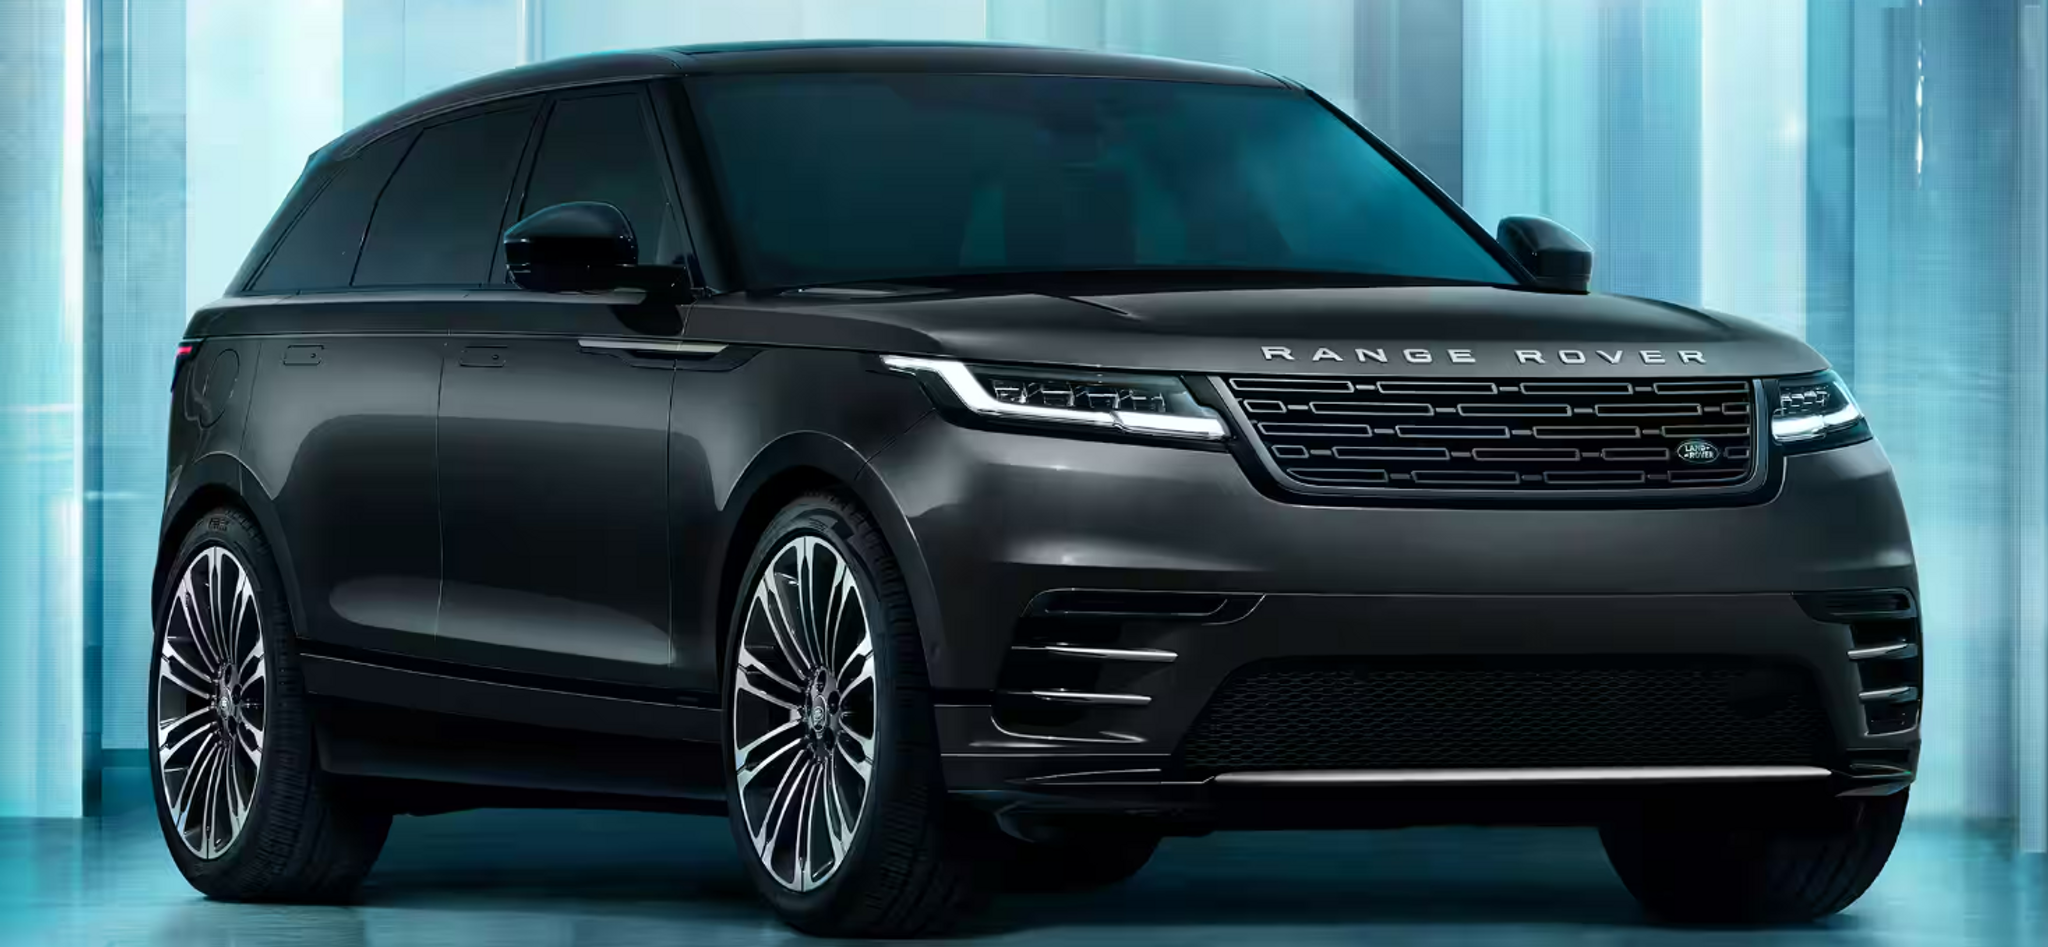 Range Rover: courting luxury drivers through TikTok